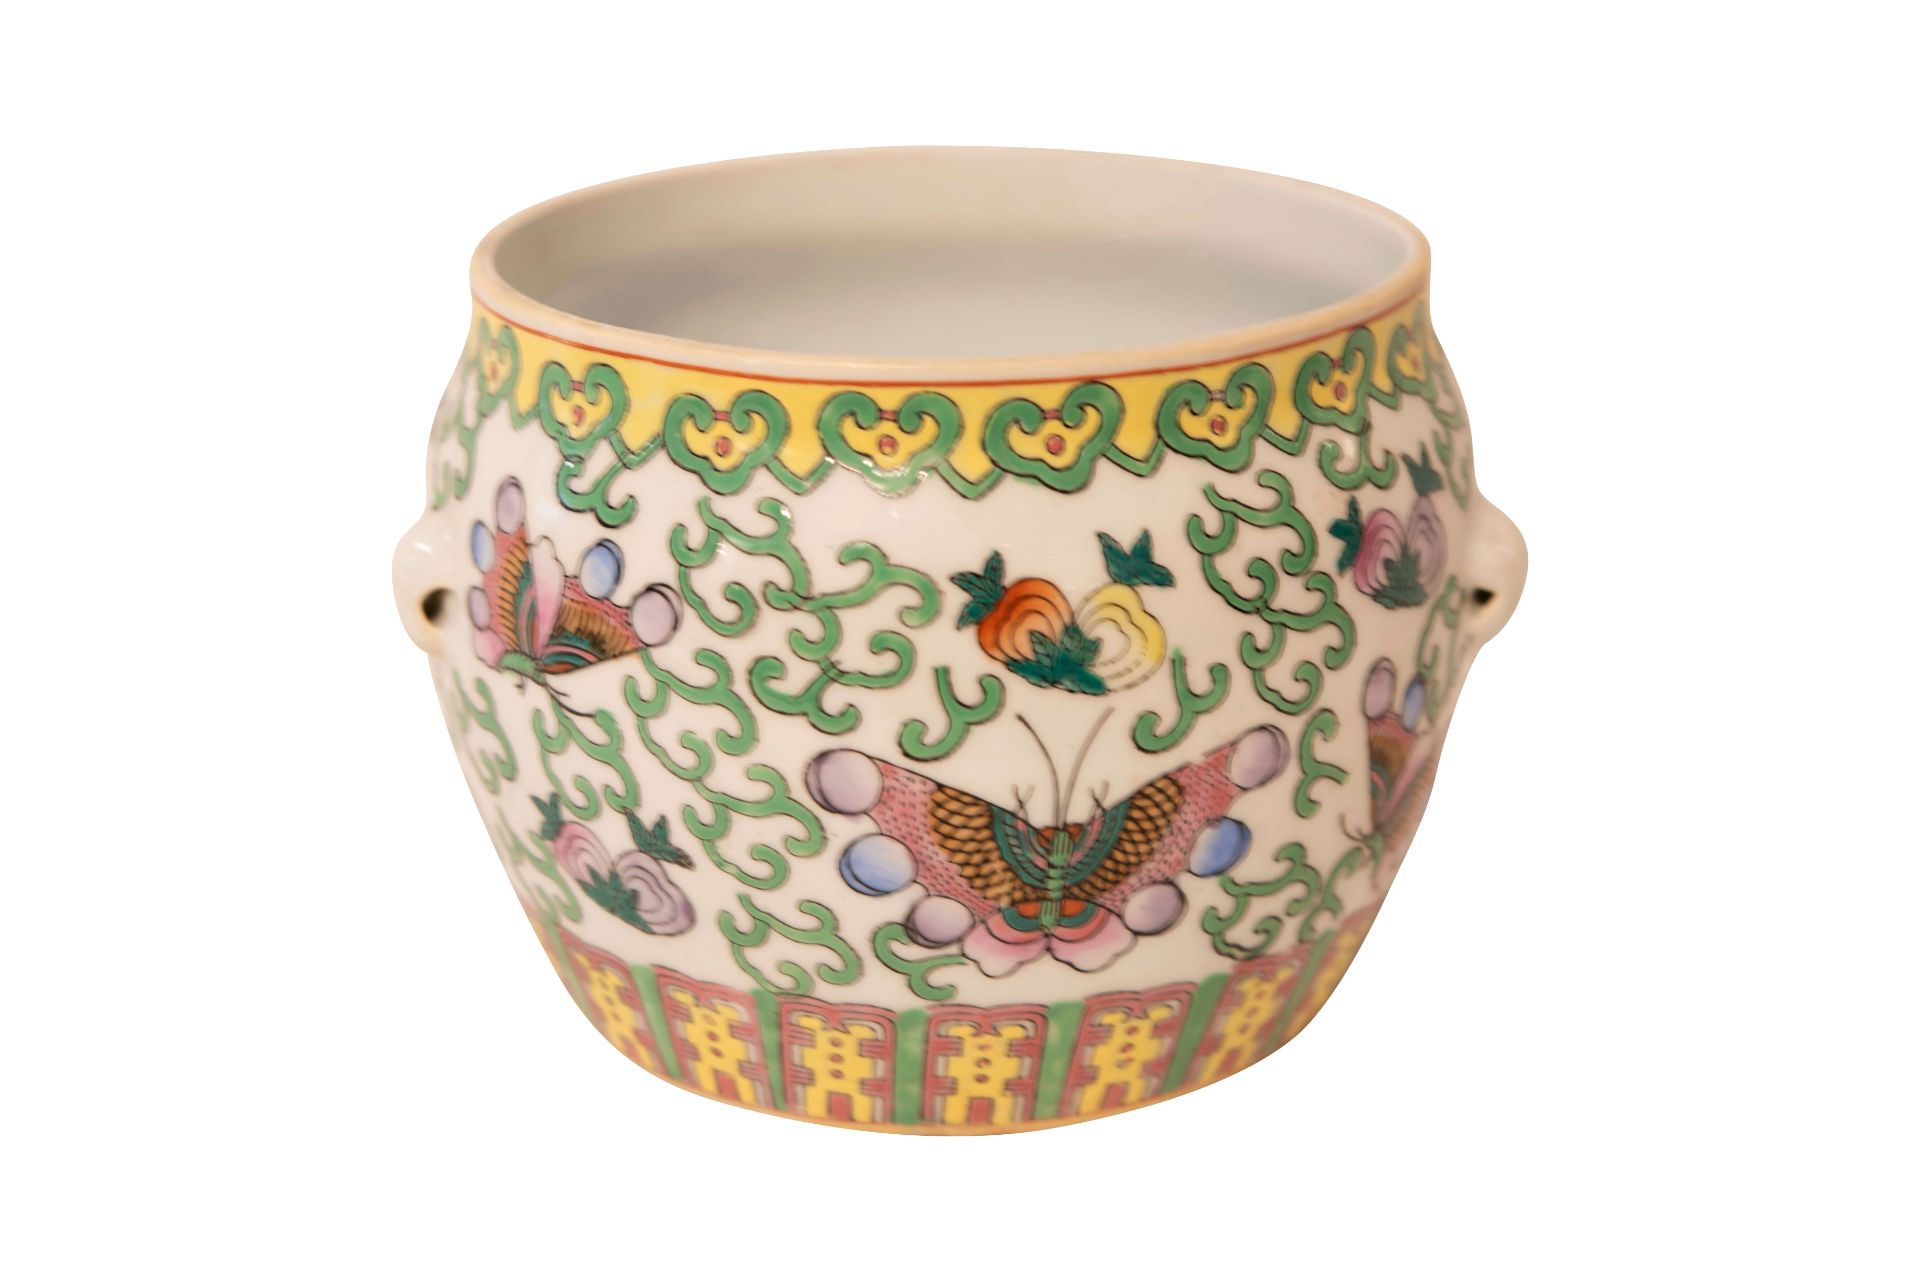 Handbemalter bunter Asiatischer Keramik Topf | Colorful Hand Painted Asian Ceramic Pot